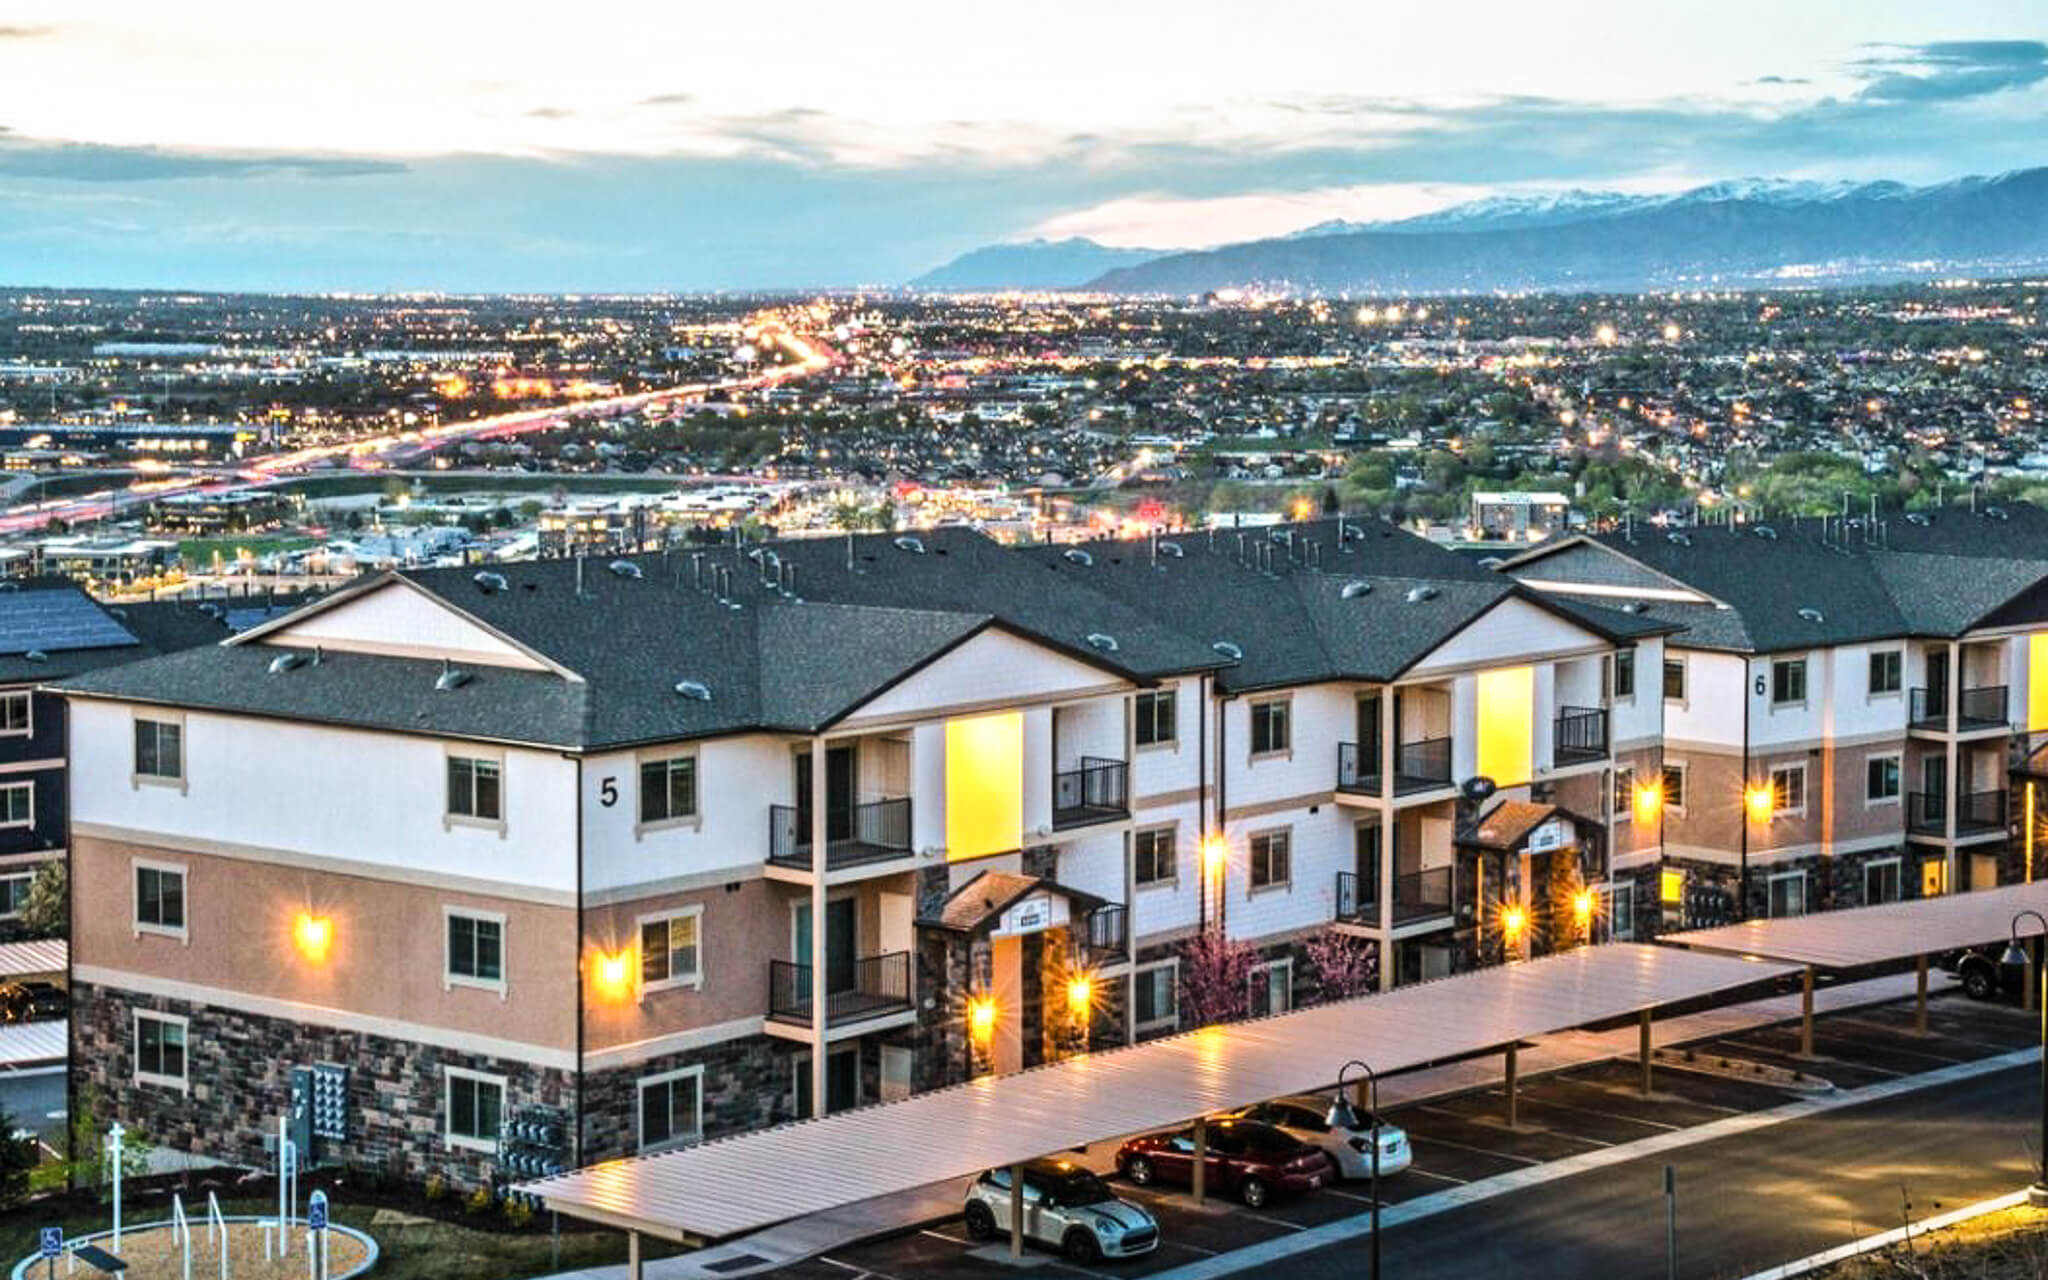 Paragon Corporate Housing - Triton Terrace Apartments - Draper Utah